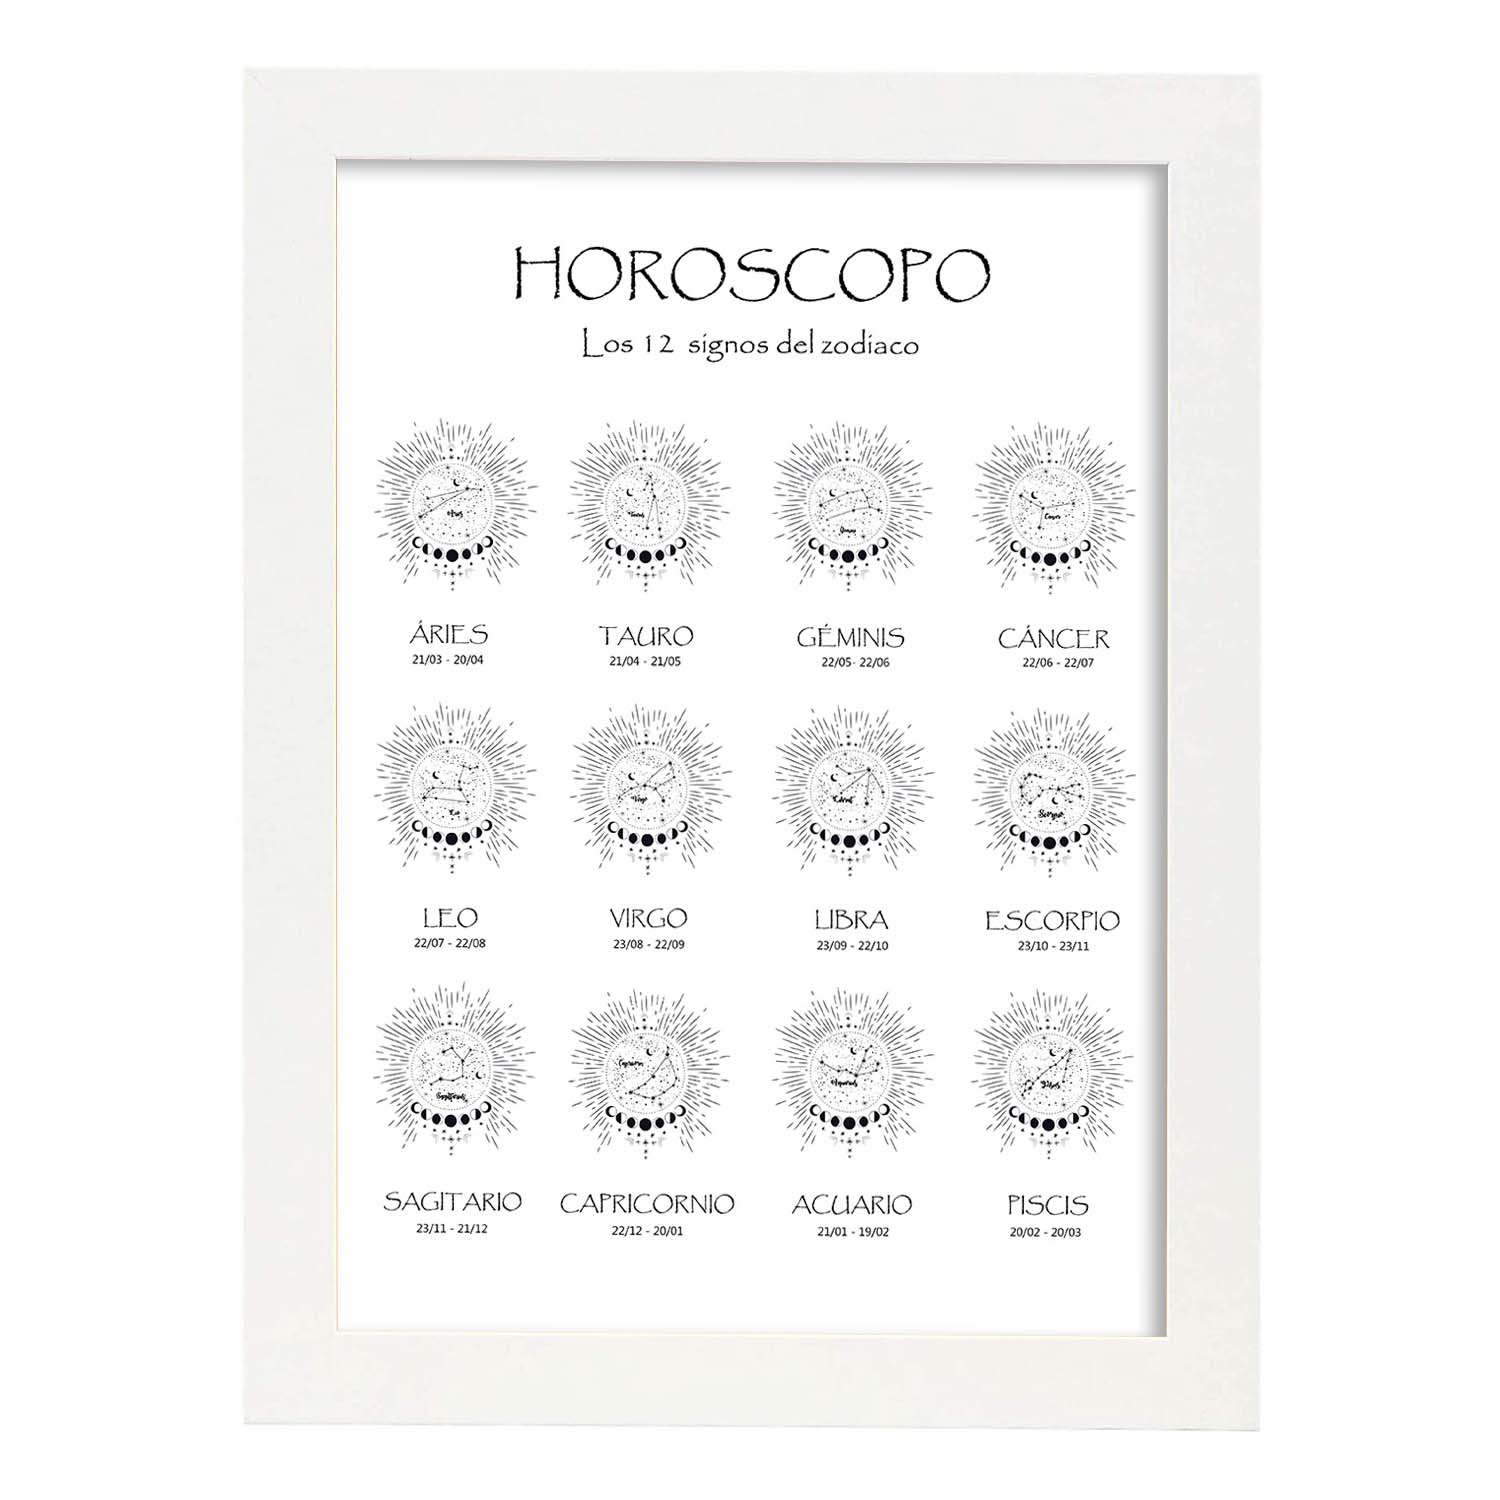 Poster de Horoscopos en español. Lamina de horoscopos y astrología.-Artwork-Nacnic-A3-Marco Blanco-Nacnic Estudio SL